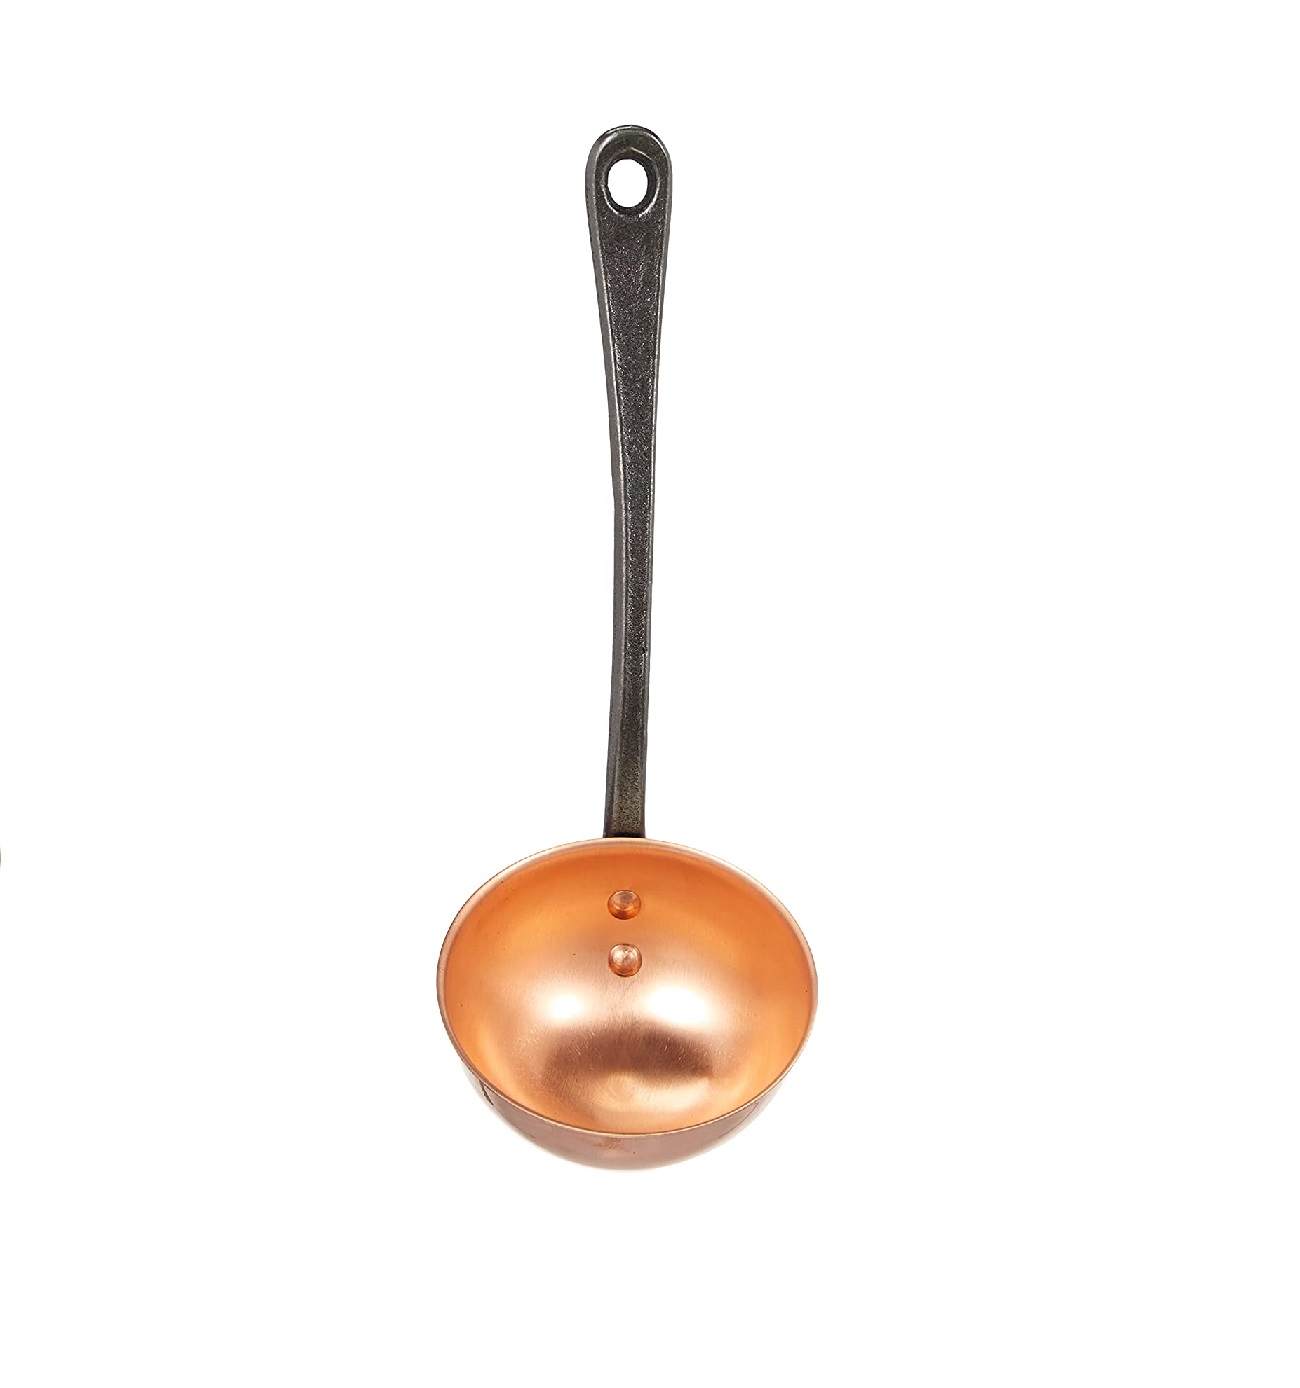 Baumalu copper Ladle with cast iron handle